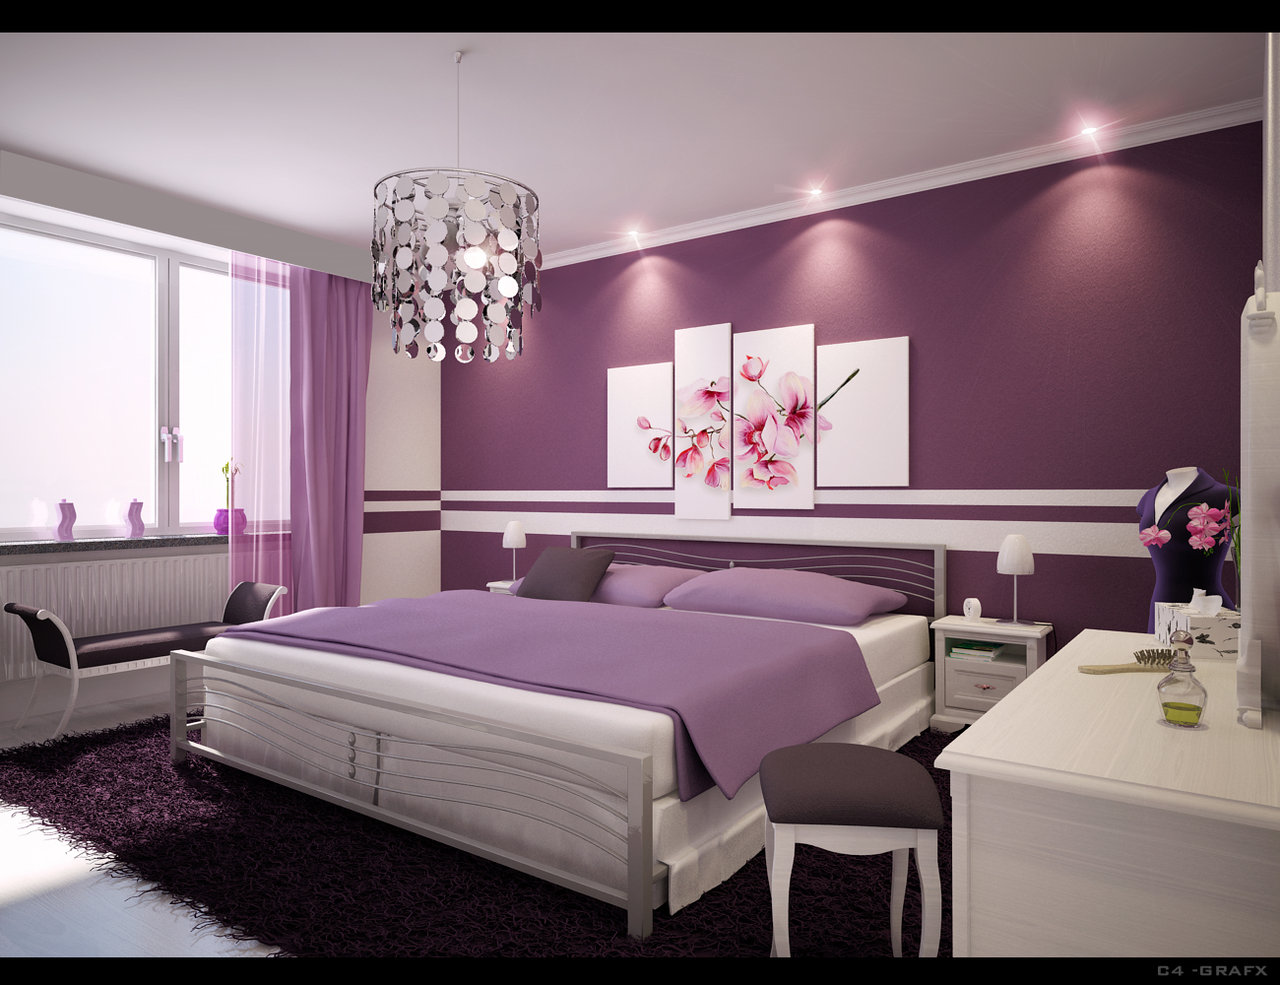 Outstanding Girls Bedroom Interior Design Ideas 1280 x 985 · 201 kB · jpeg